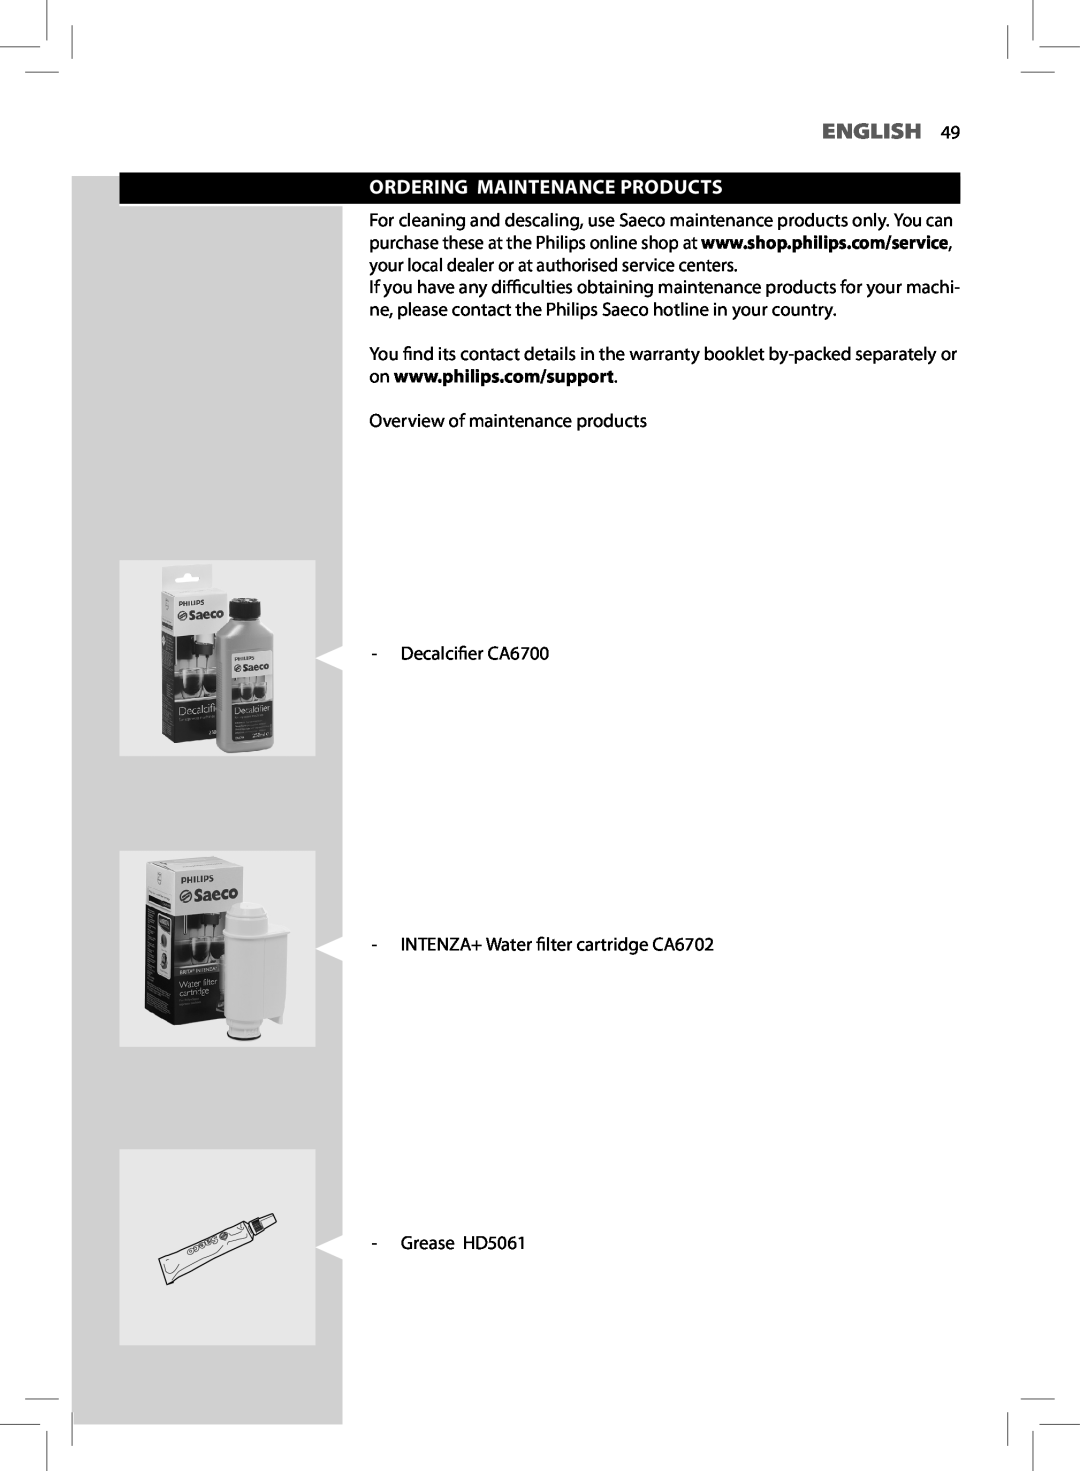 Saeco Coffee Makers HD8761 English, Ordering Maintenance Products, Overview of maintenance products Decalcifier CA6700 